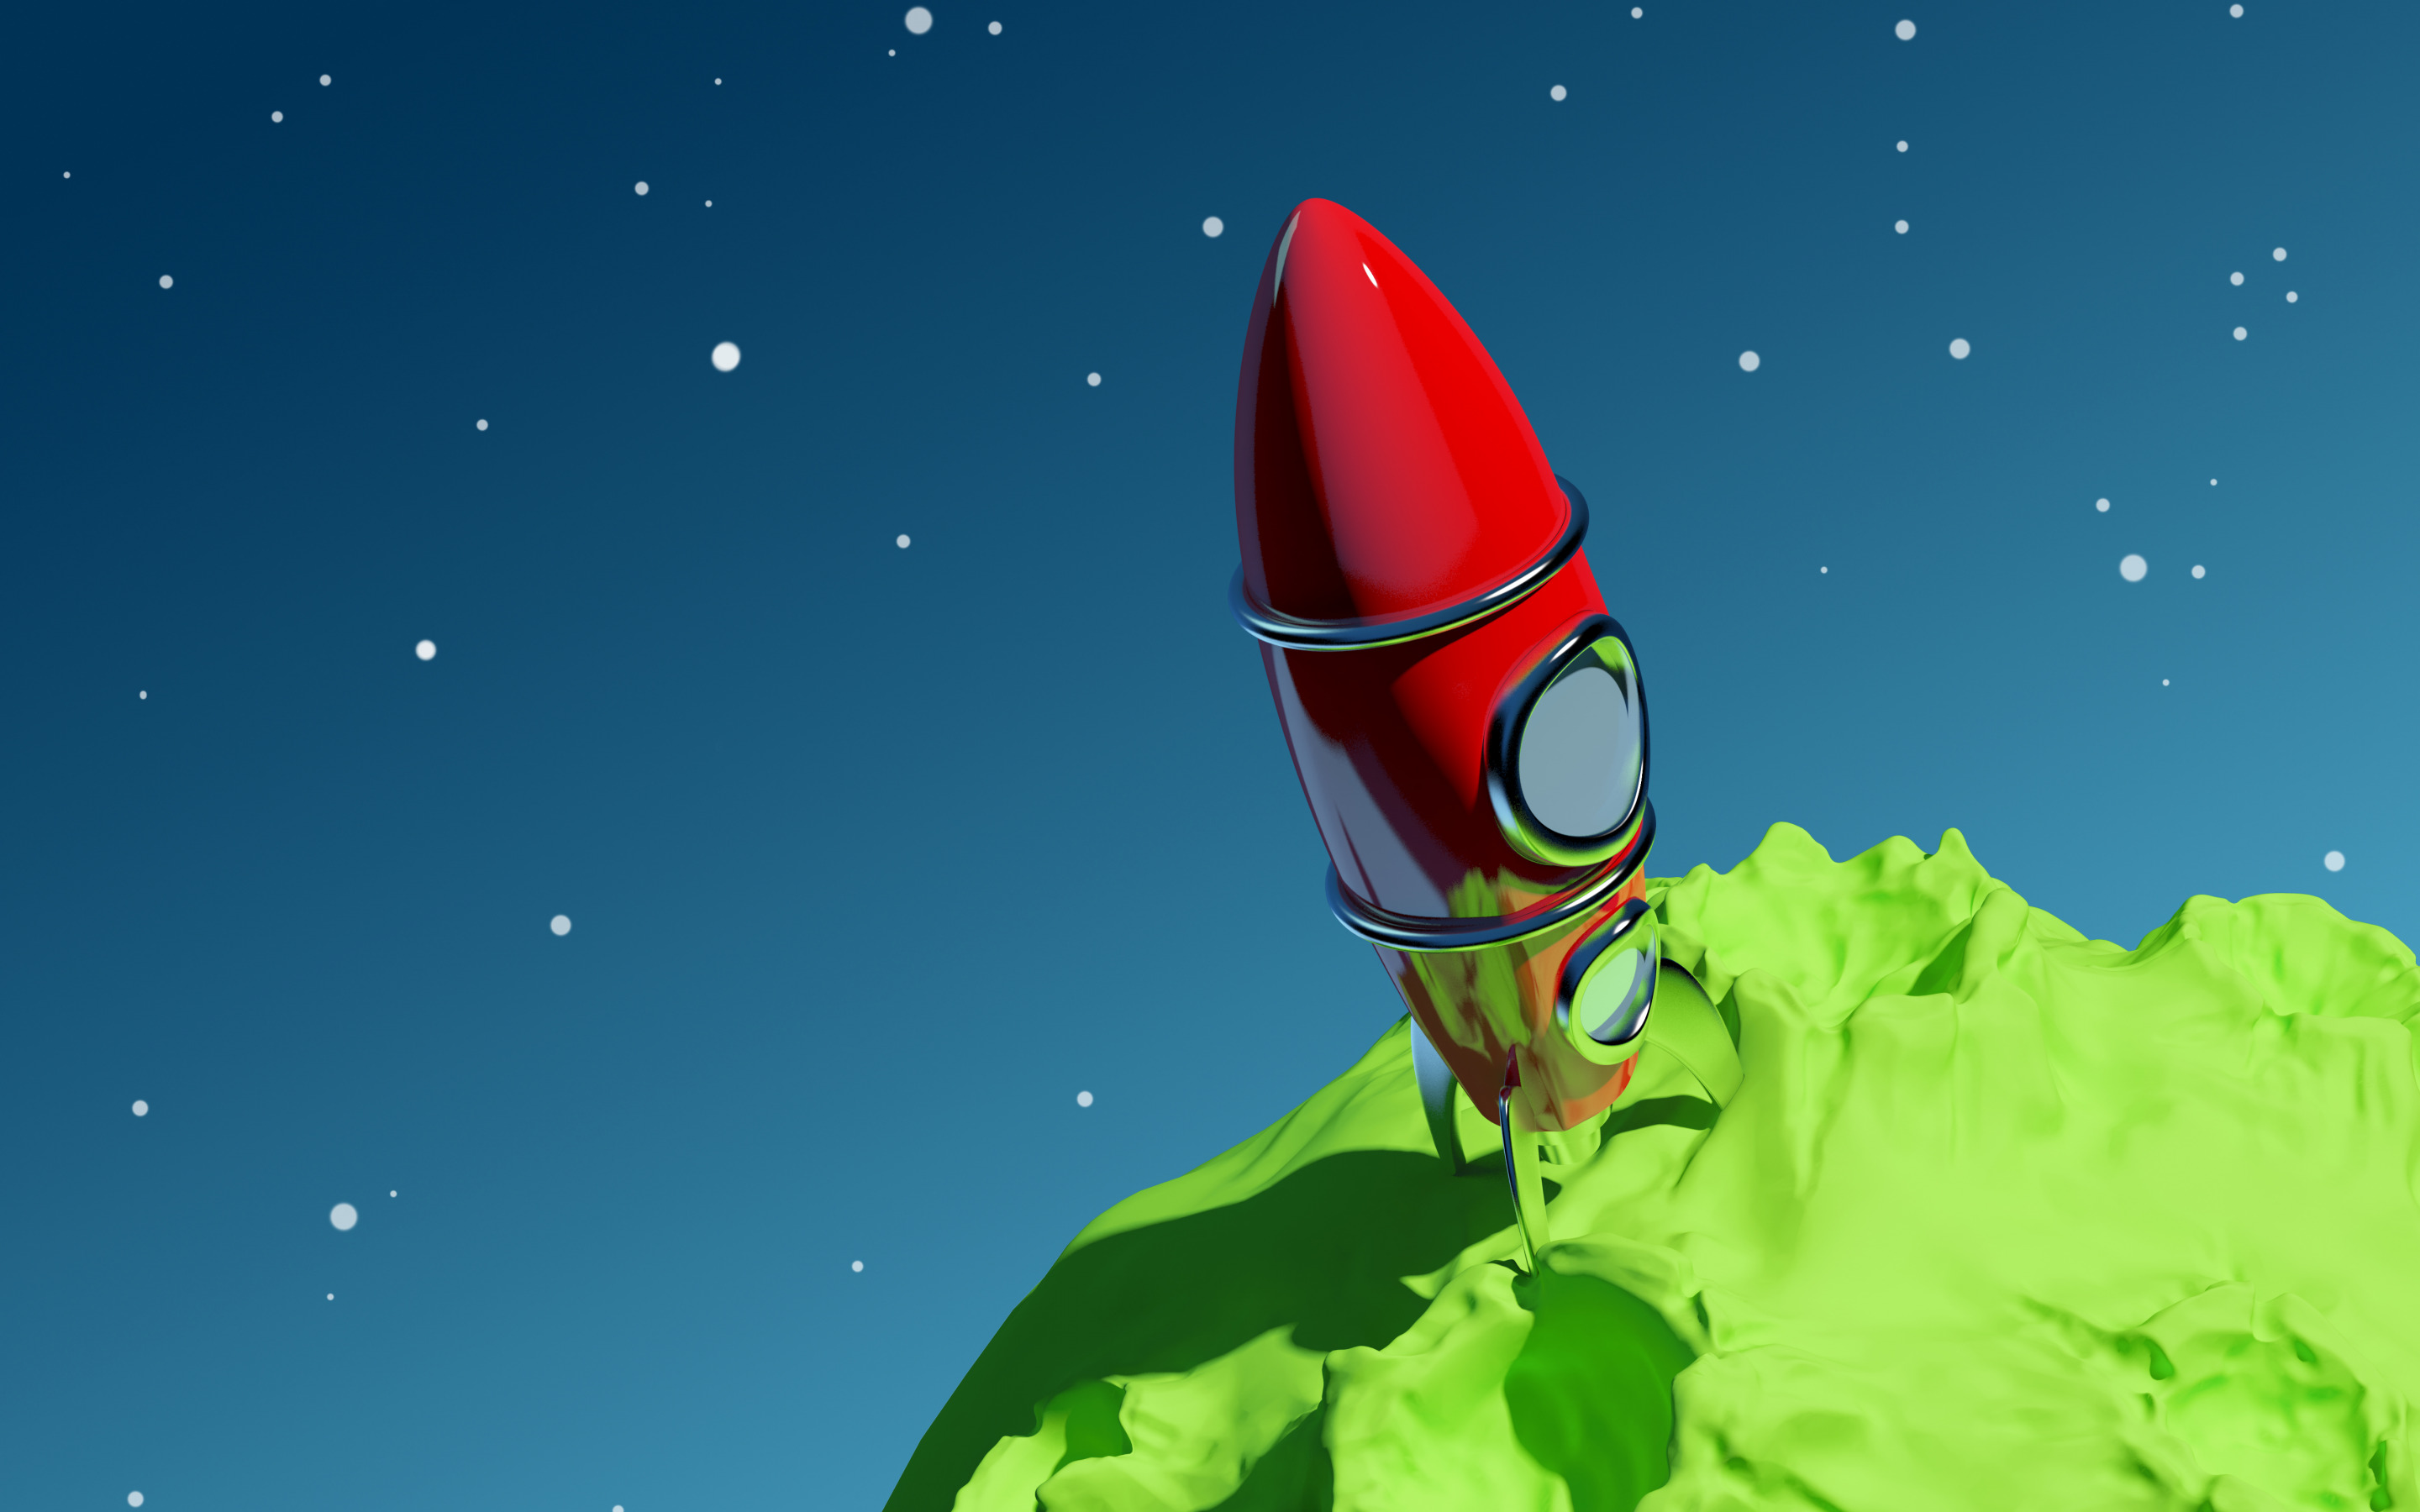 3d赤いロケット, 離陸, スタートアップの概念, 3dロケット, 3次元地球, テイクオフコンセプト, スタートアップ